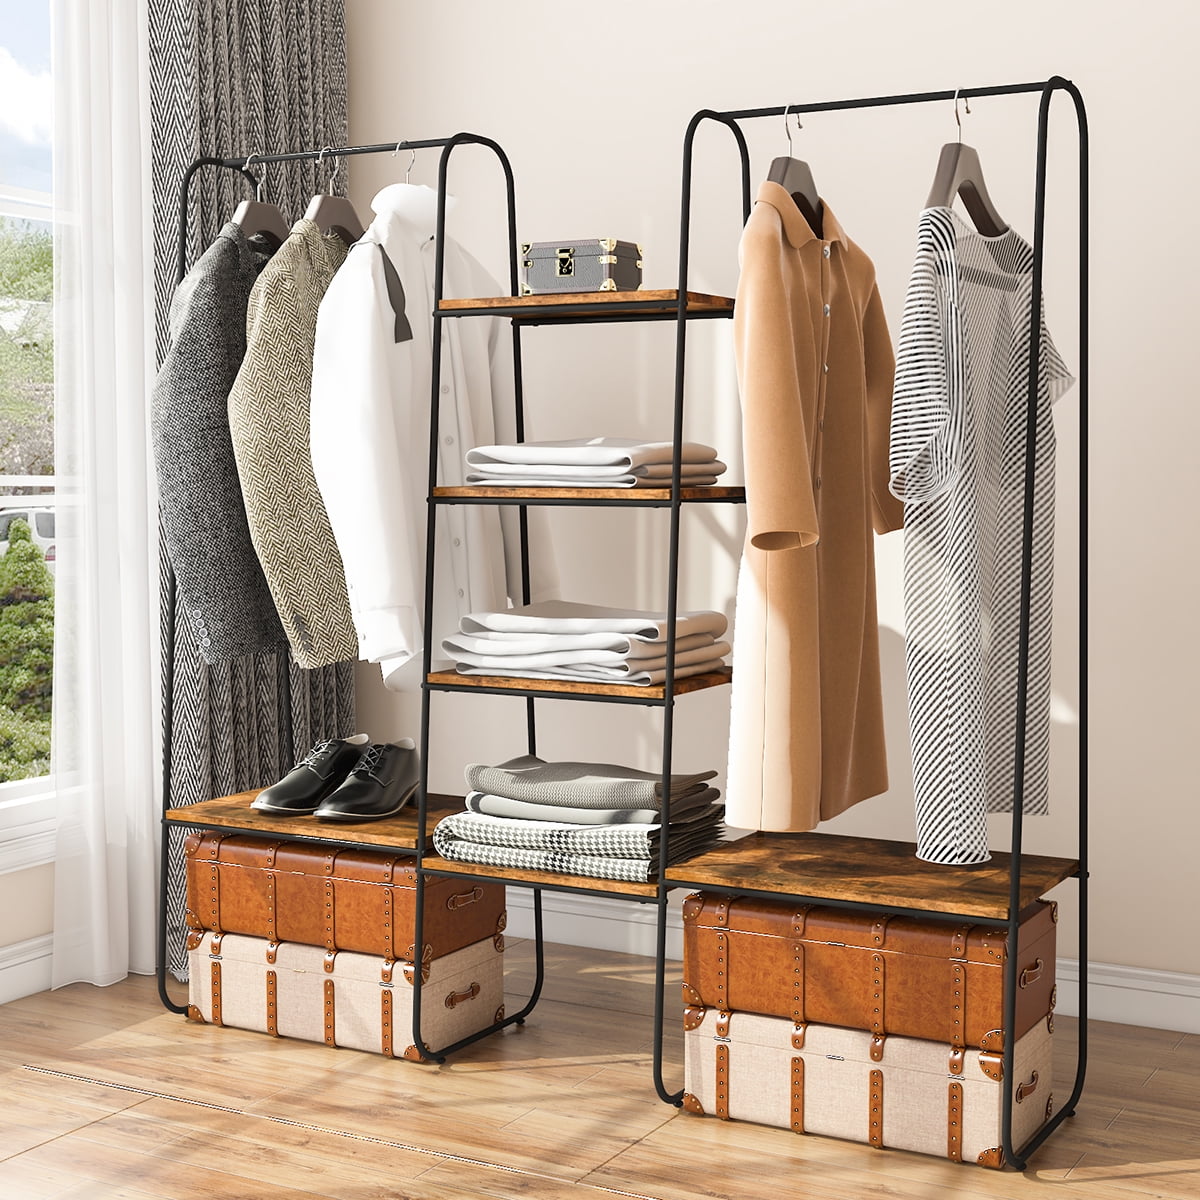 Clothes Single Garment Shoe Rack Tiers Storage Shelves Bedroom Entryway Metal US 